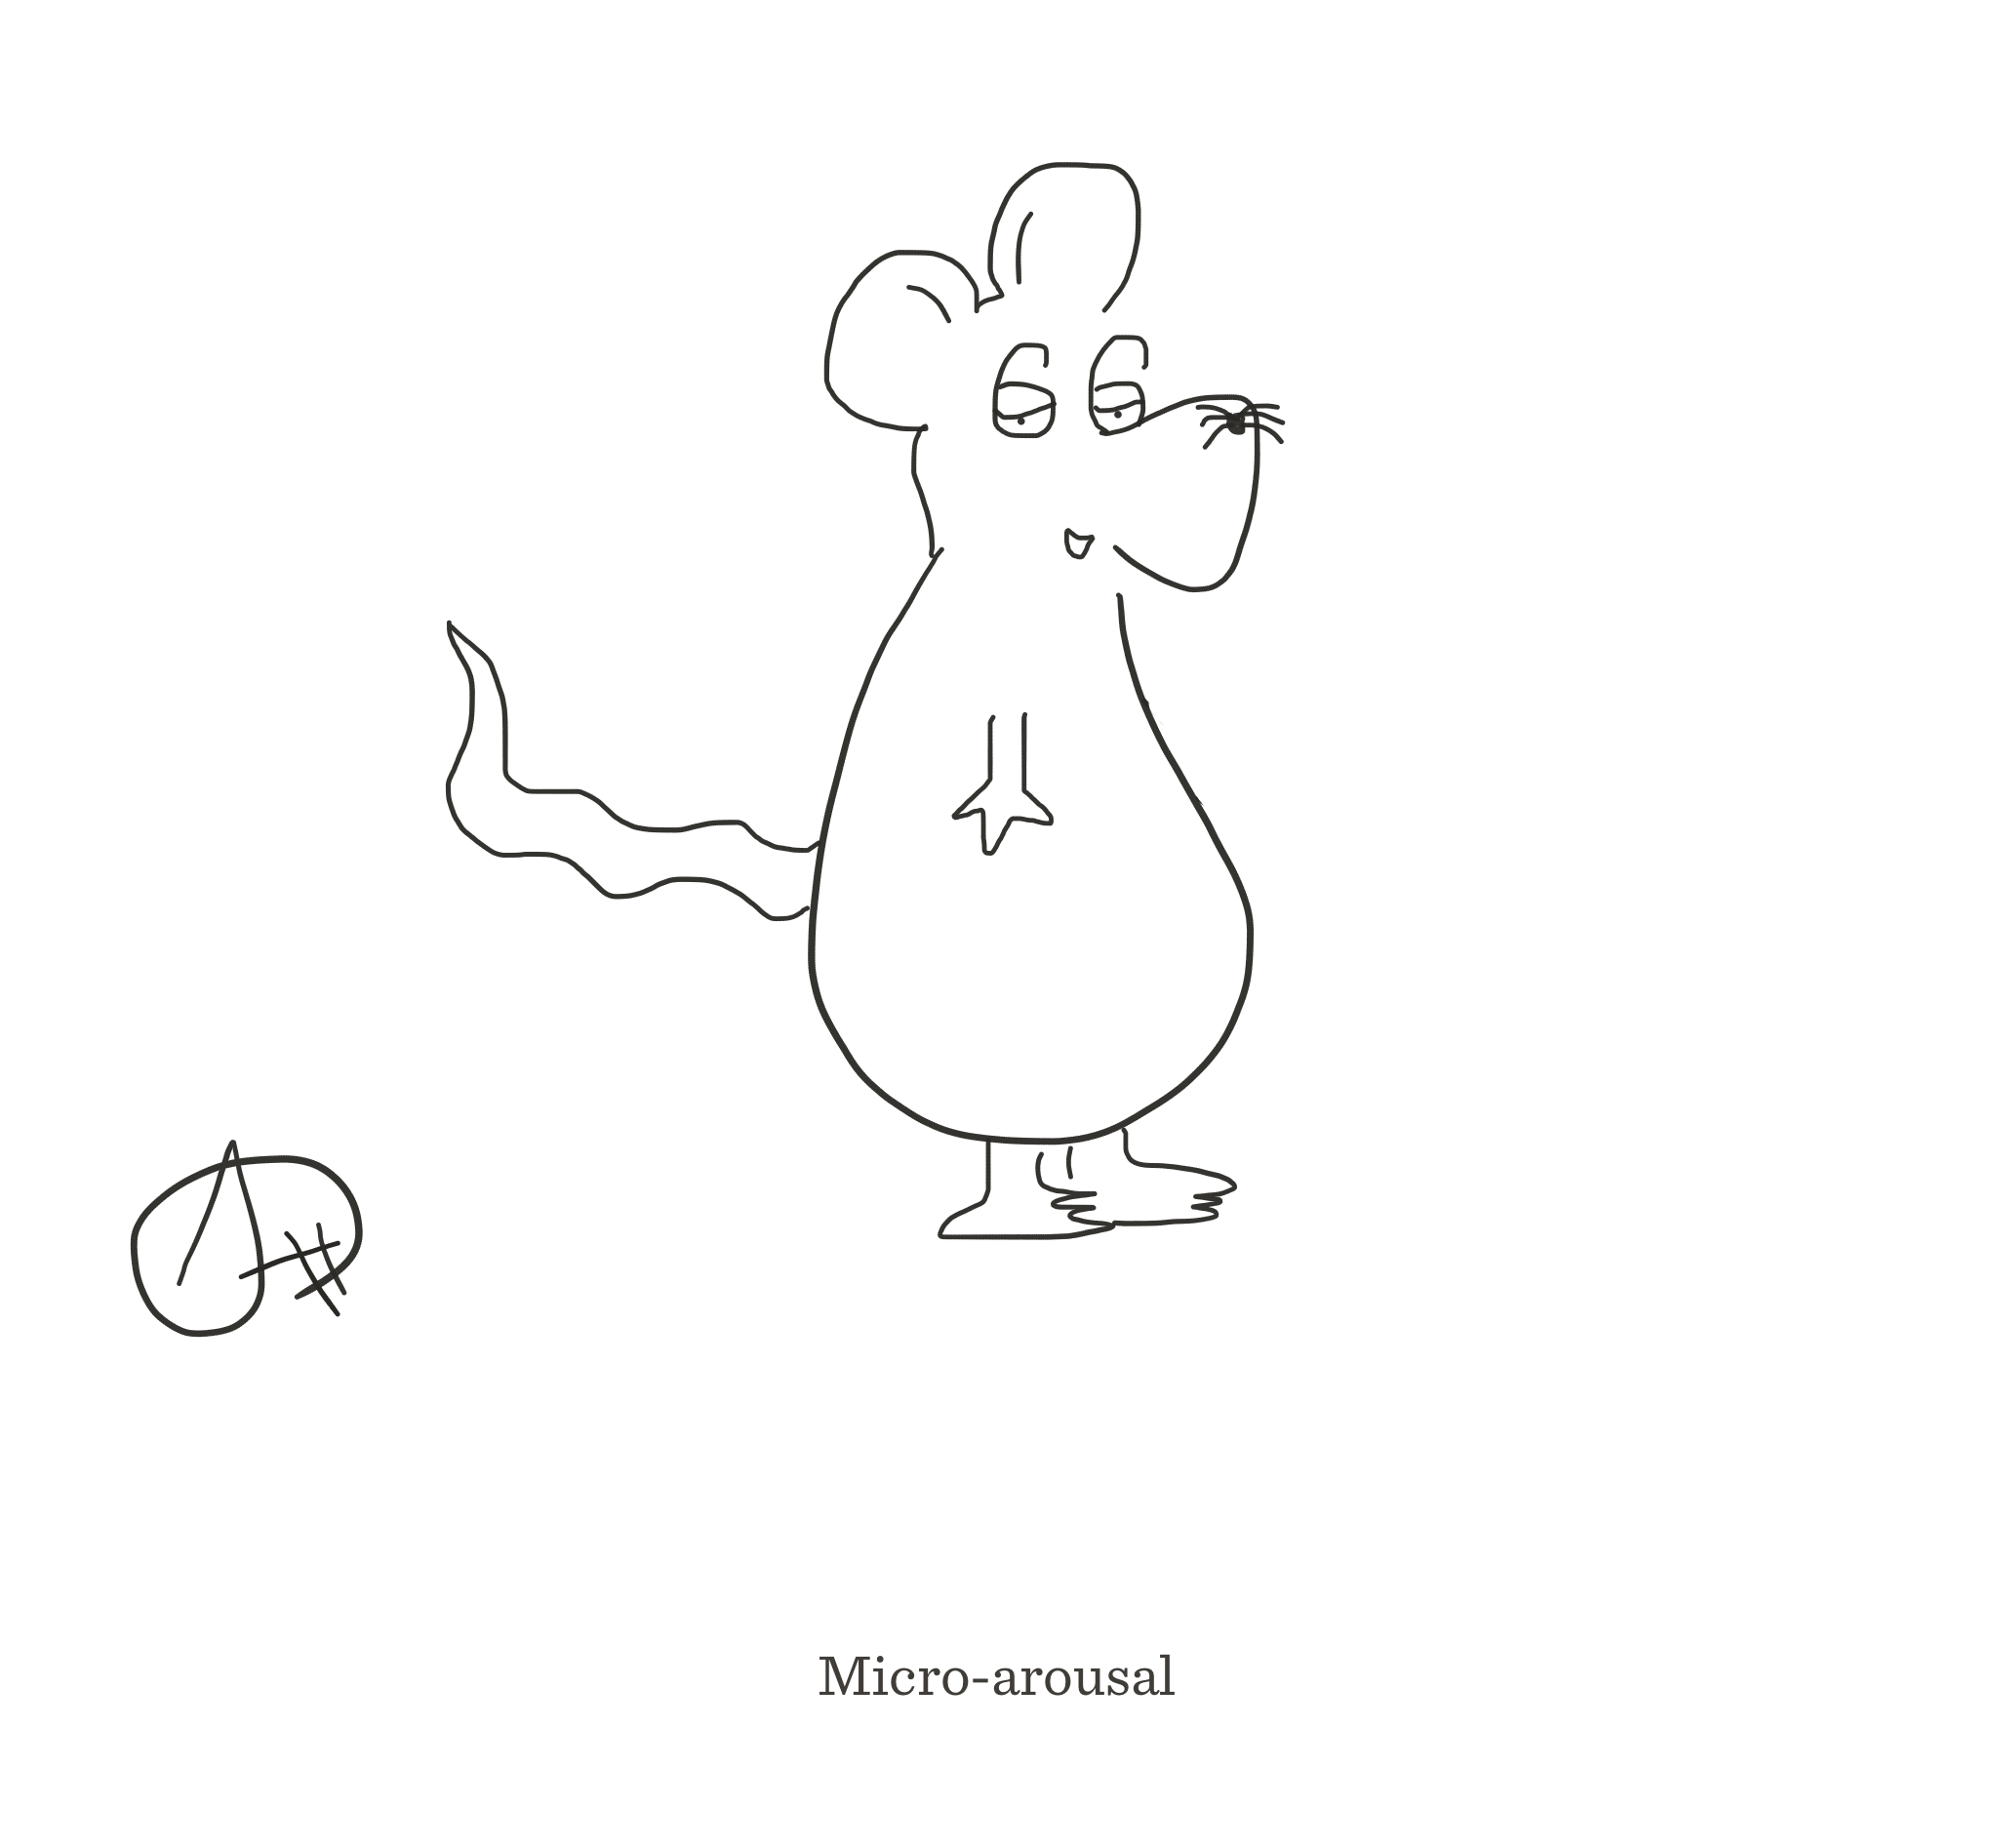 Micro-arousal, The Happy Rat cartoon